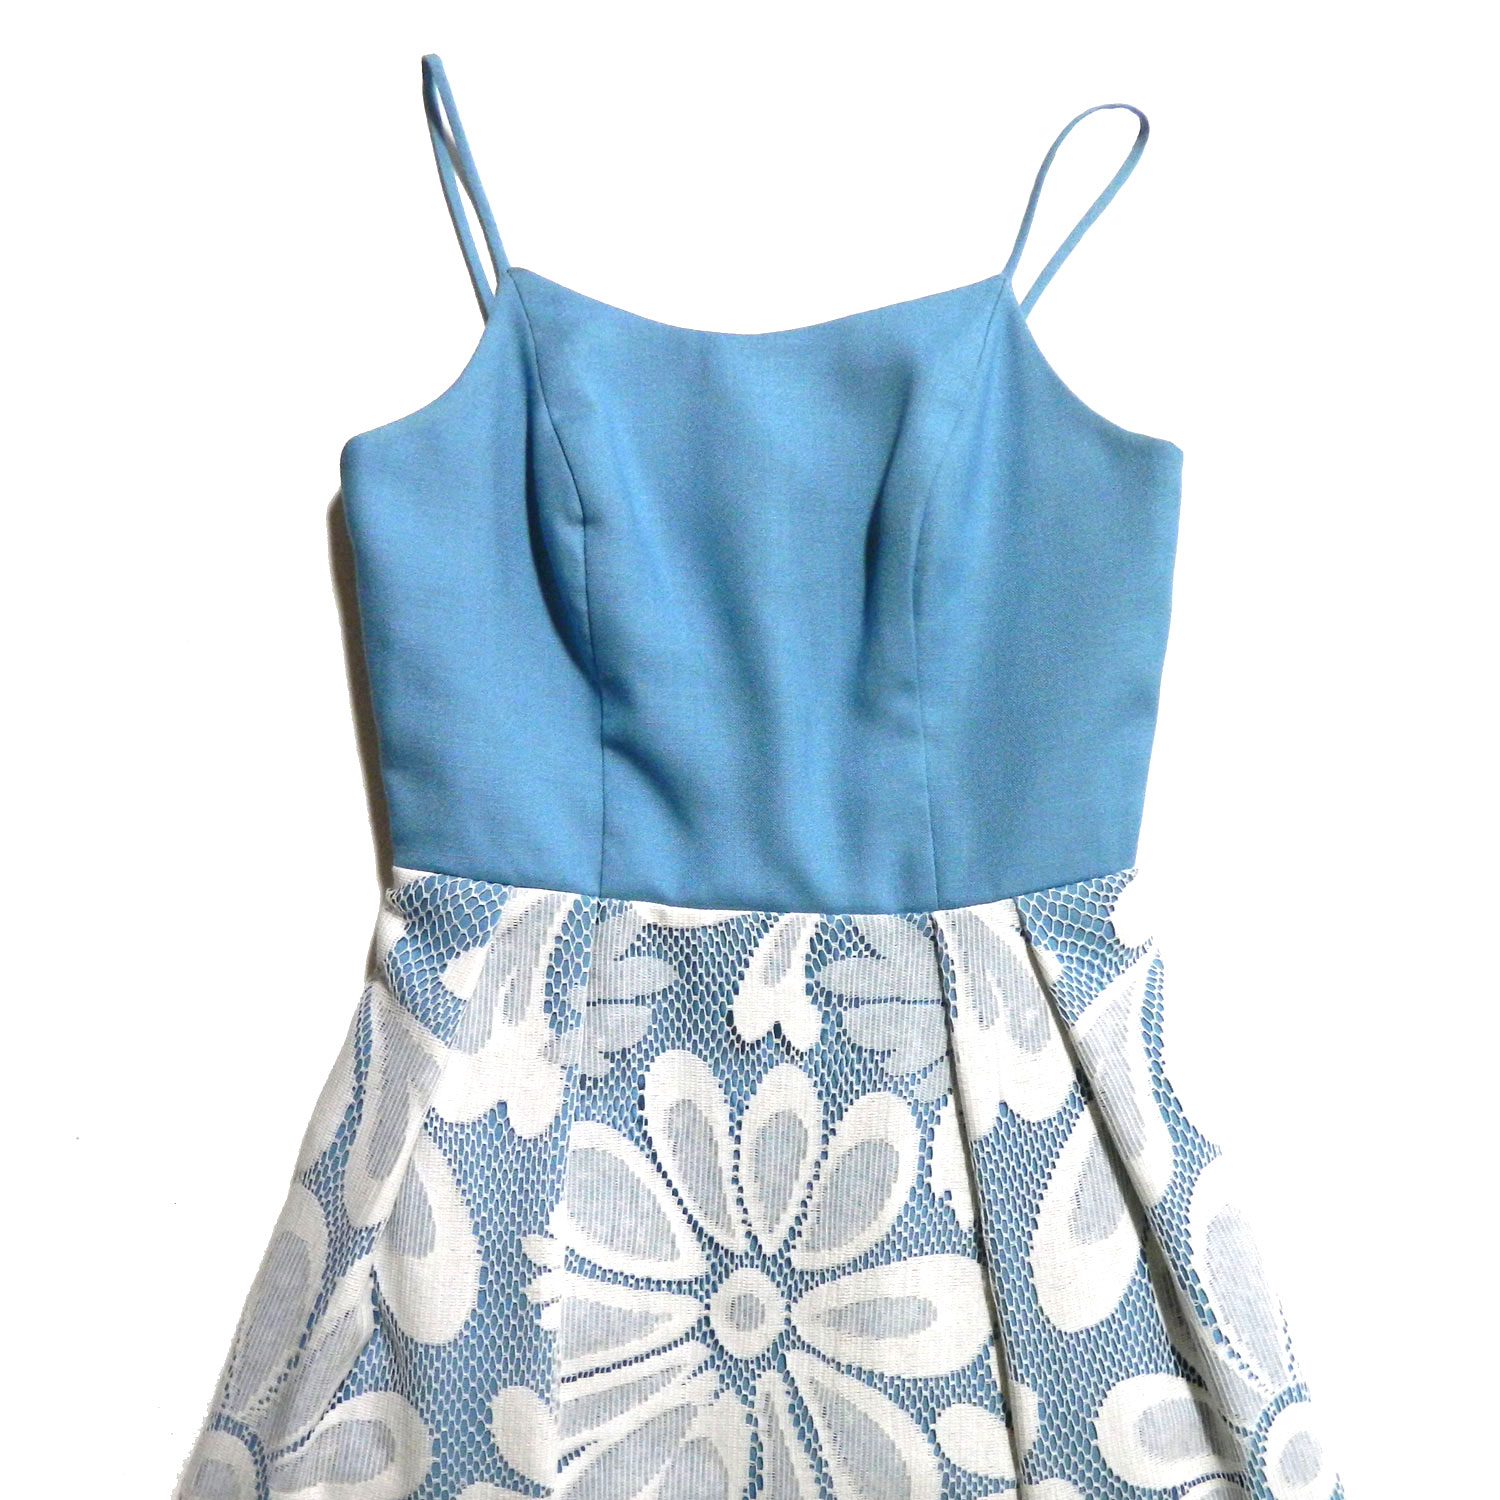 1960's long blue dress